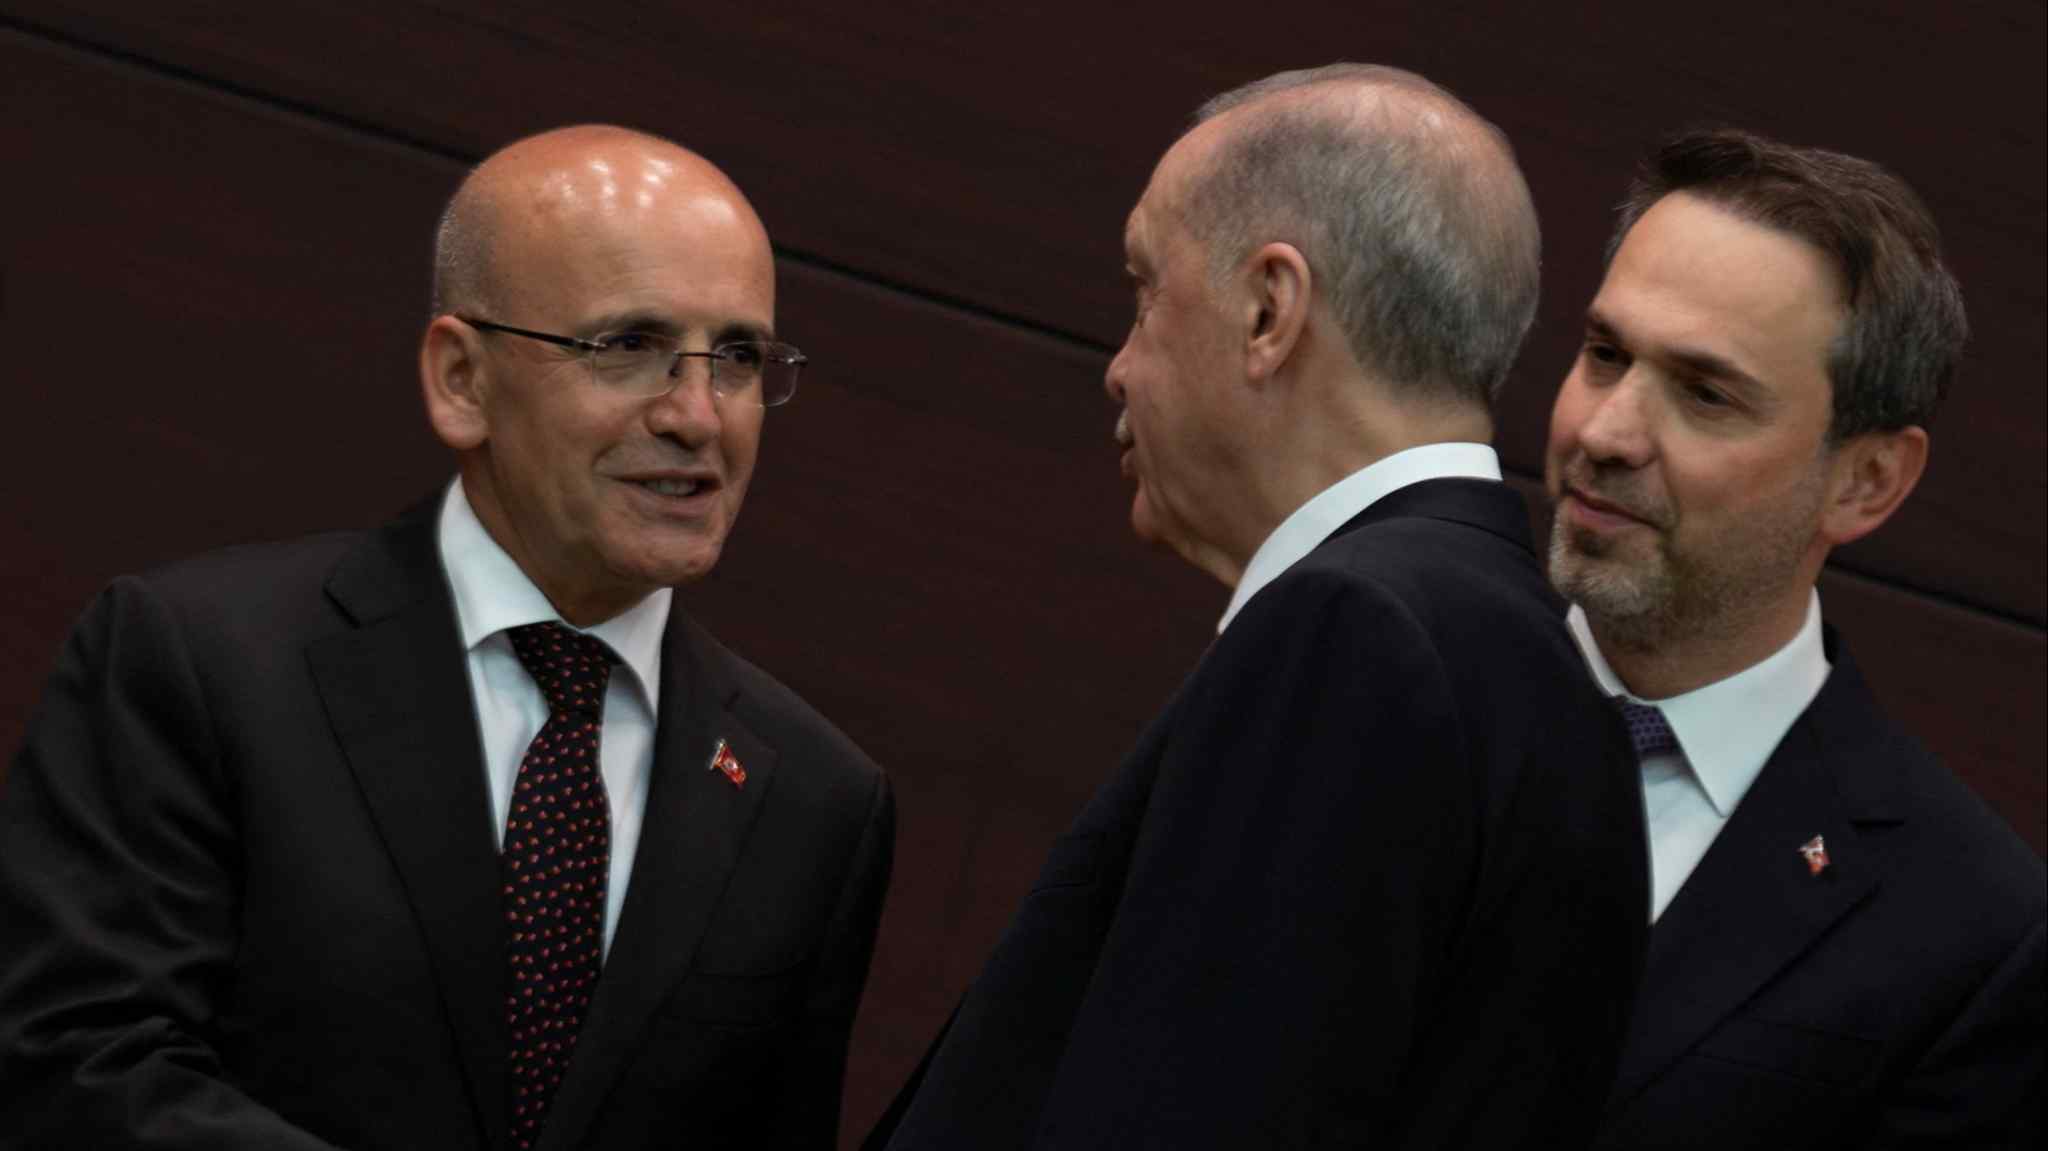 Erdoğan signals economic shift for Turkey as he revamps cabinet